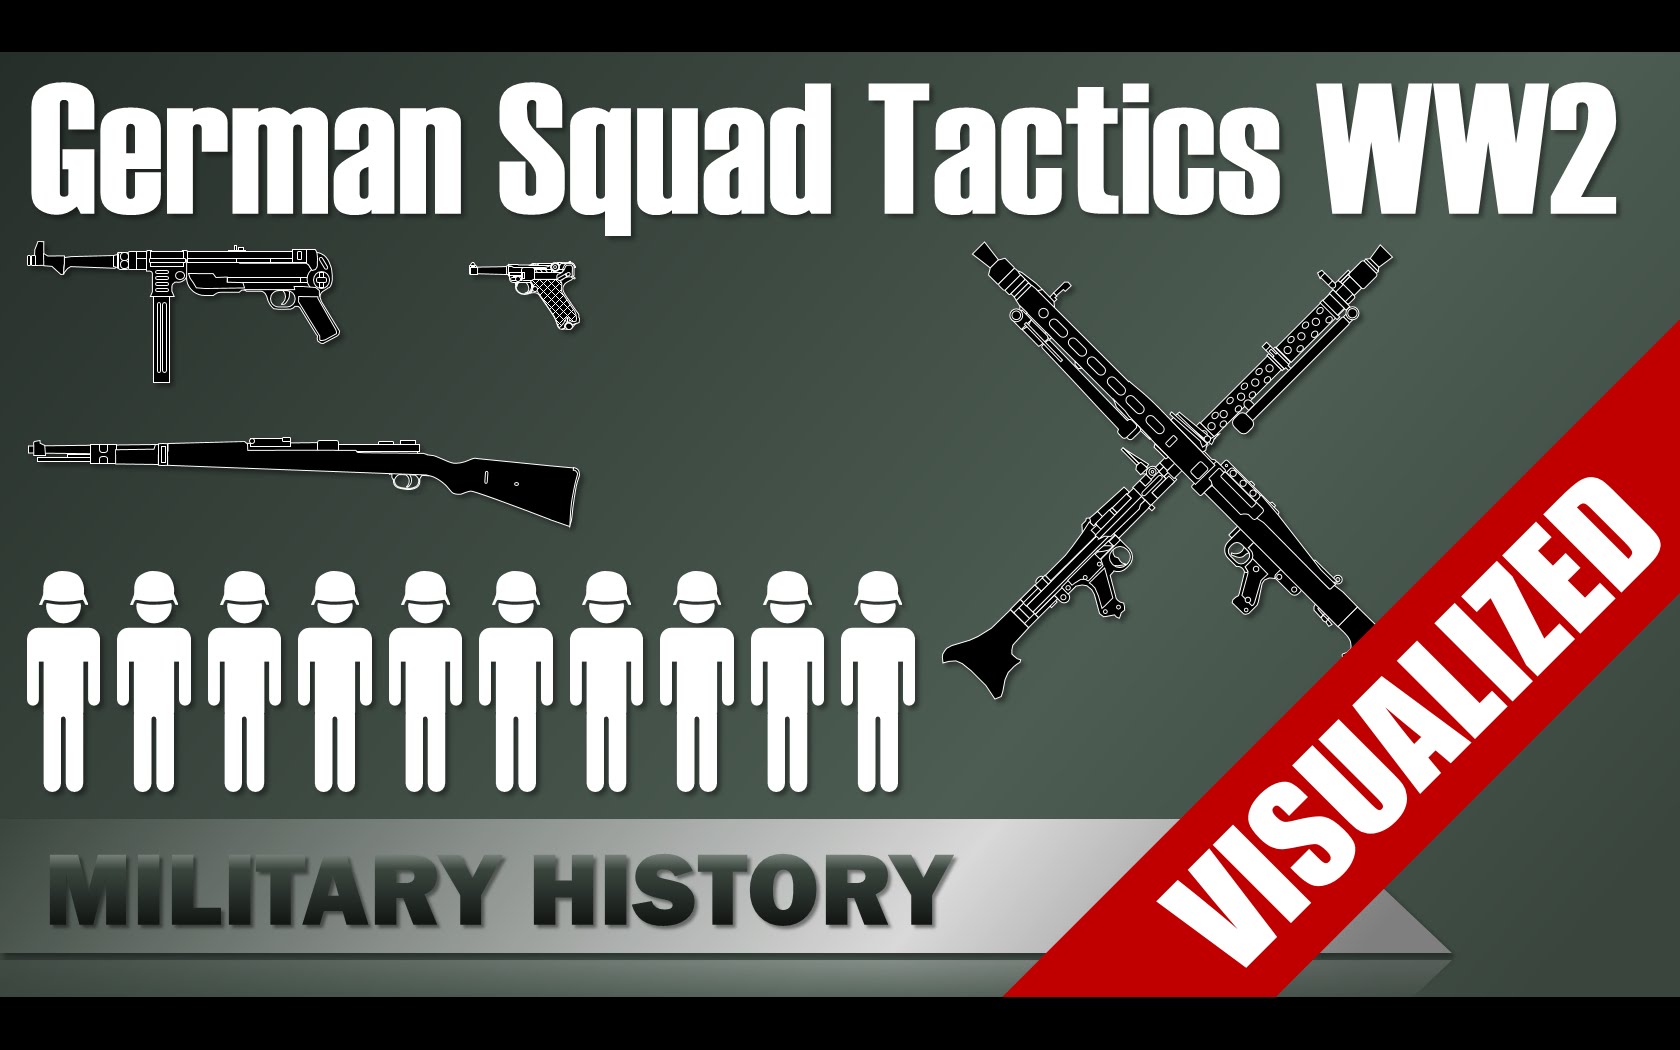 German Squad Tactics in World War 2